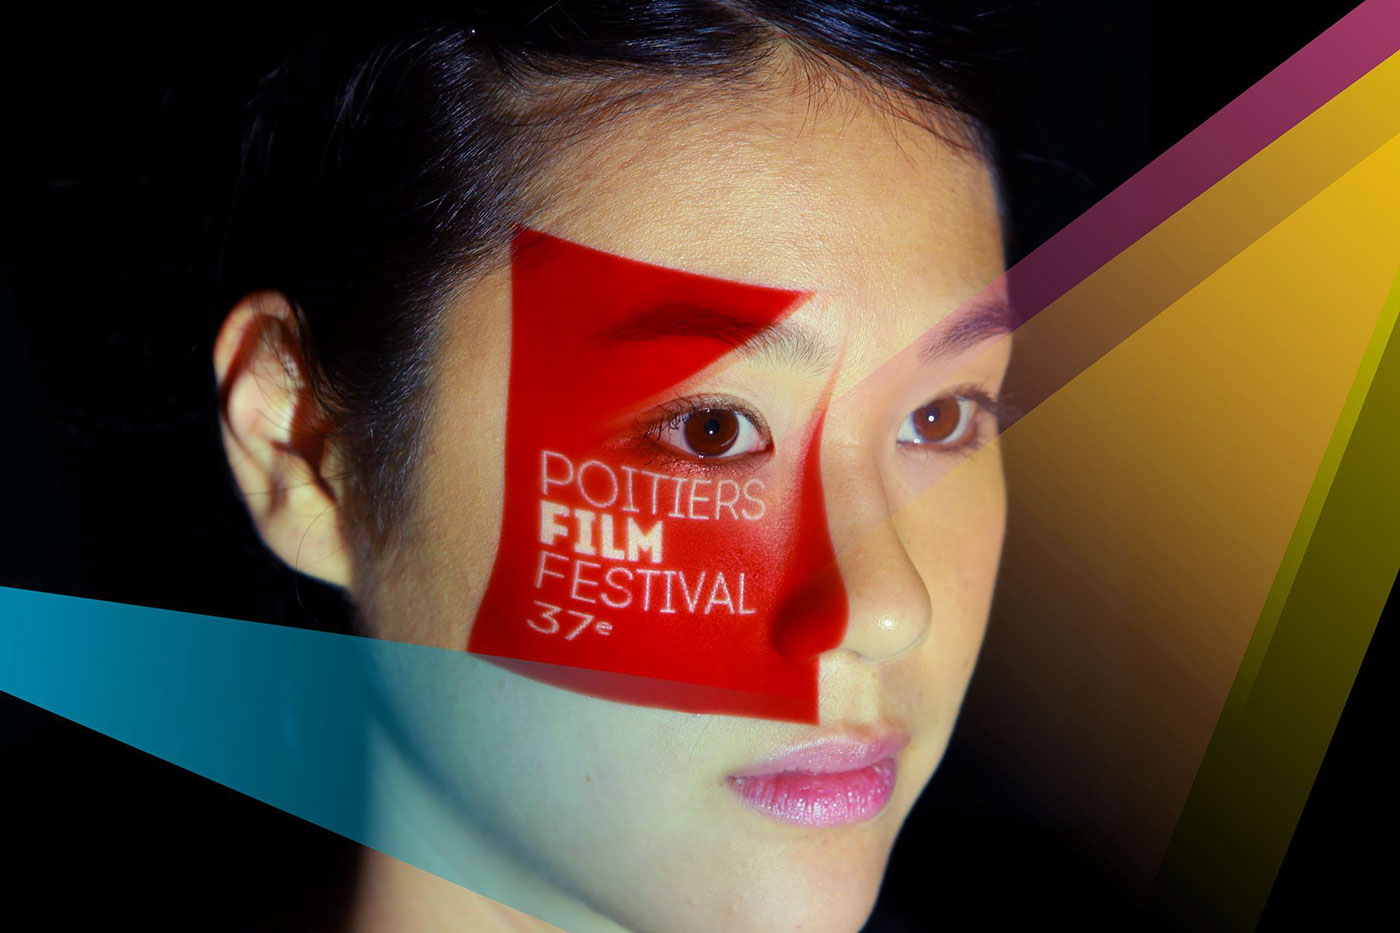 Adobe Portfolio pff festival Cinema poitiers Chine logo lumière lights projection